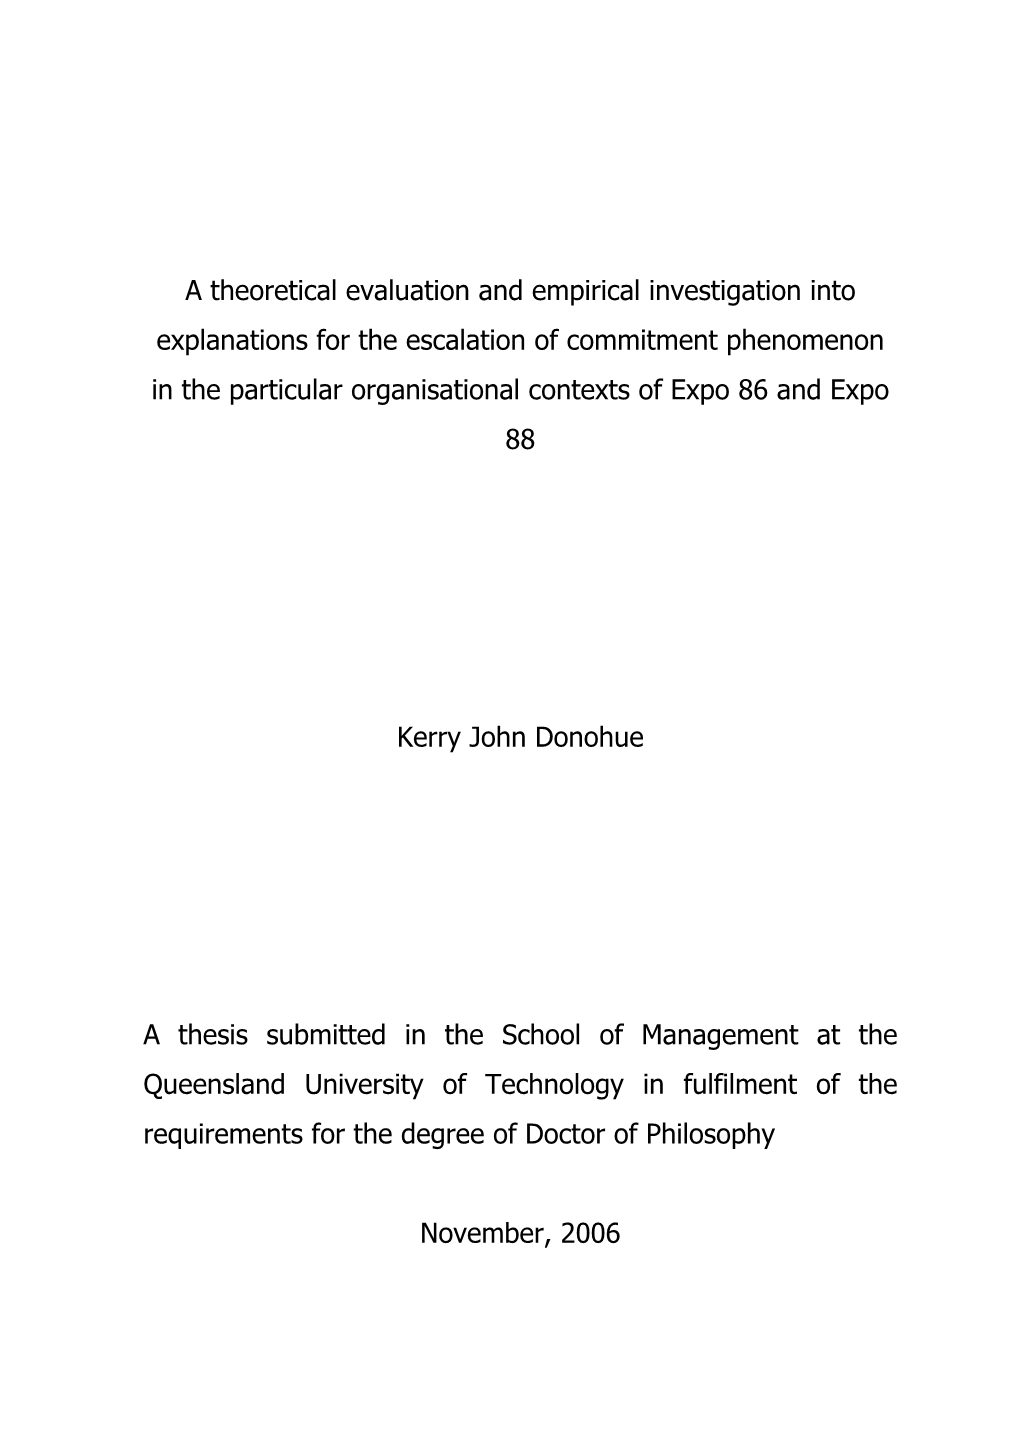 Kerry John Donohue Thesis (PDF 2MB)